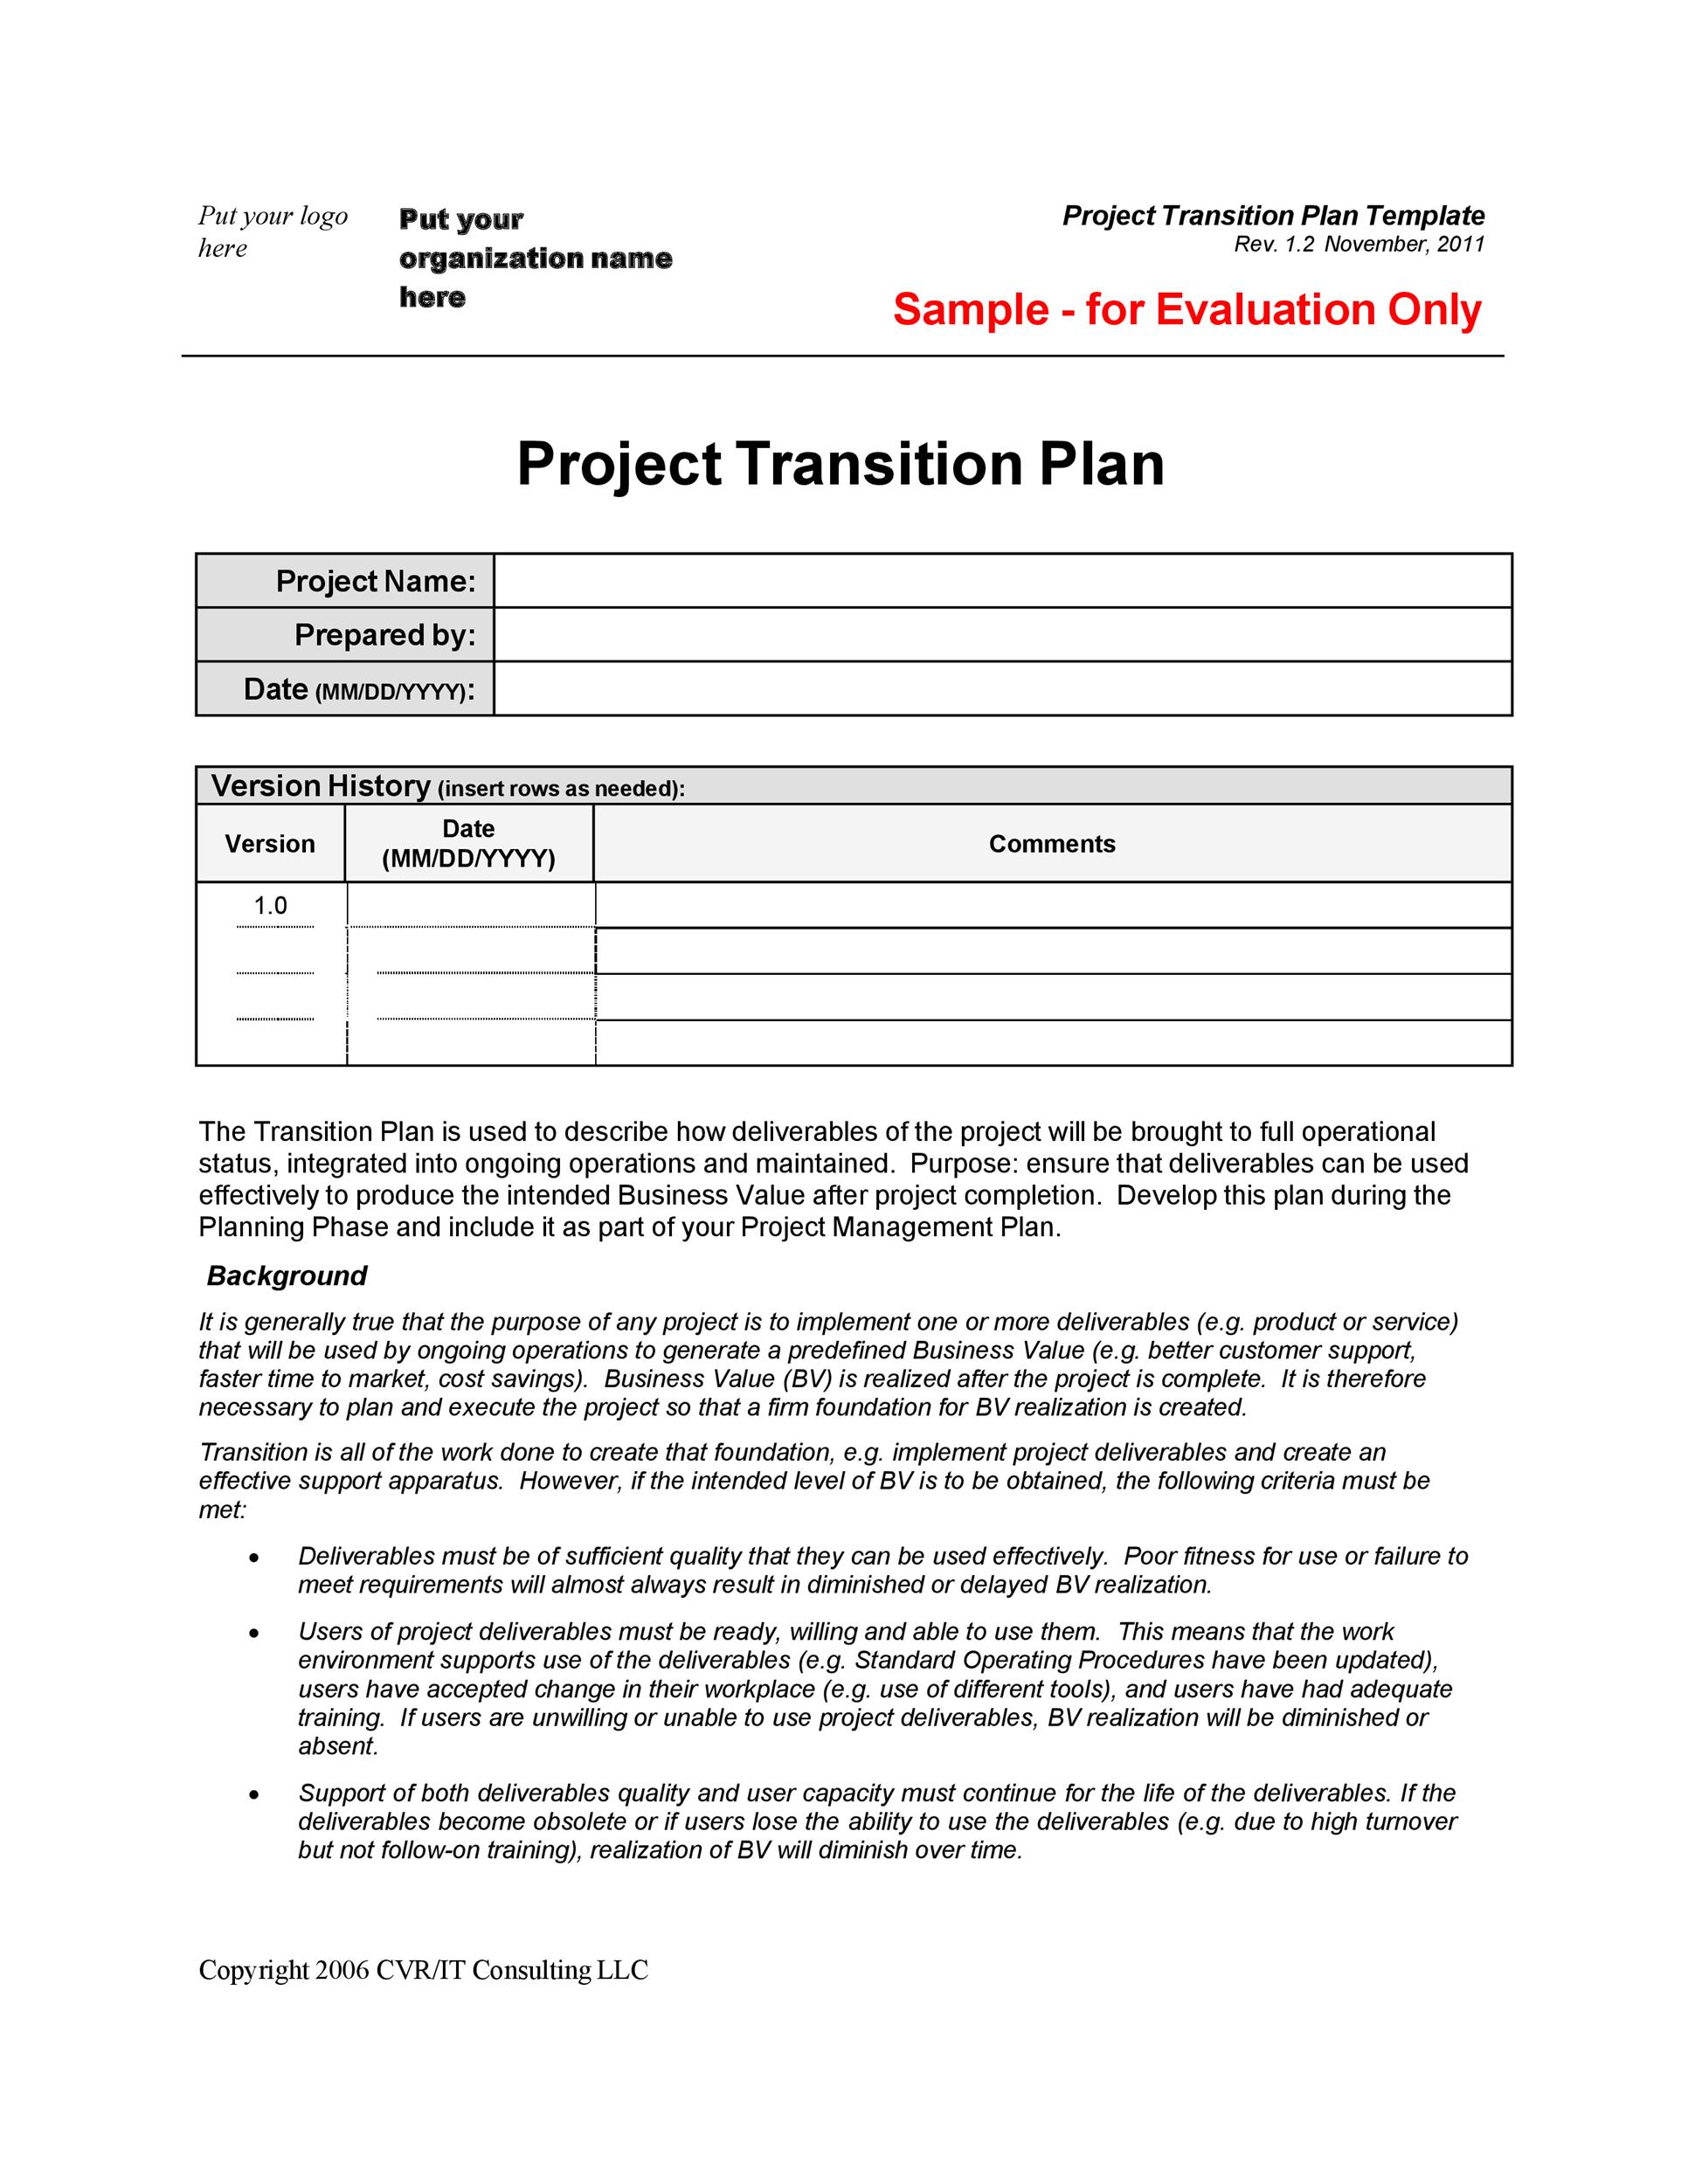 40+ Transition Plan Templates (Career, Individual) ᐅ TemplateLab